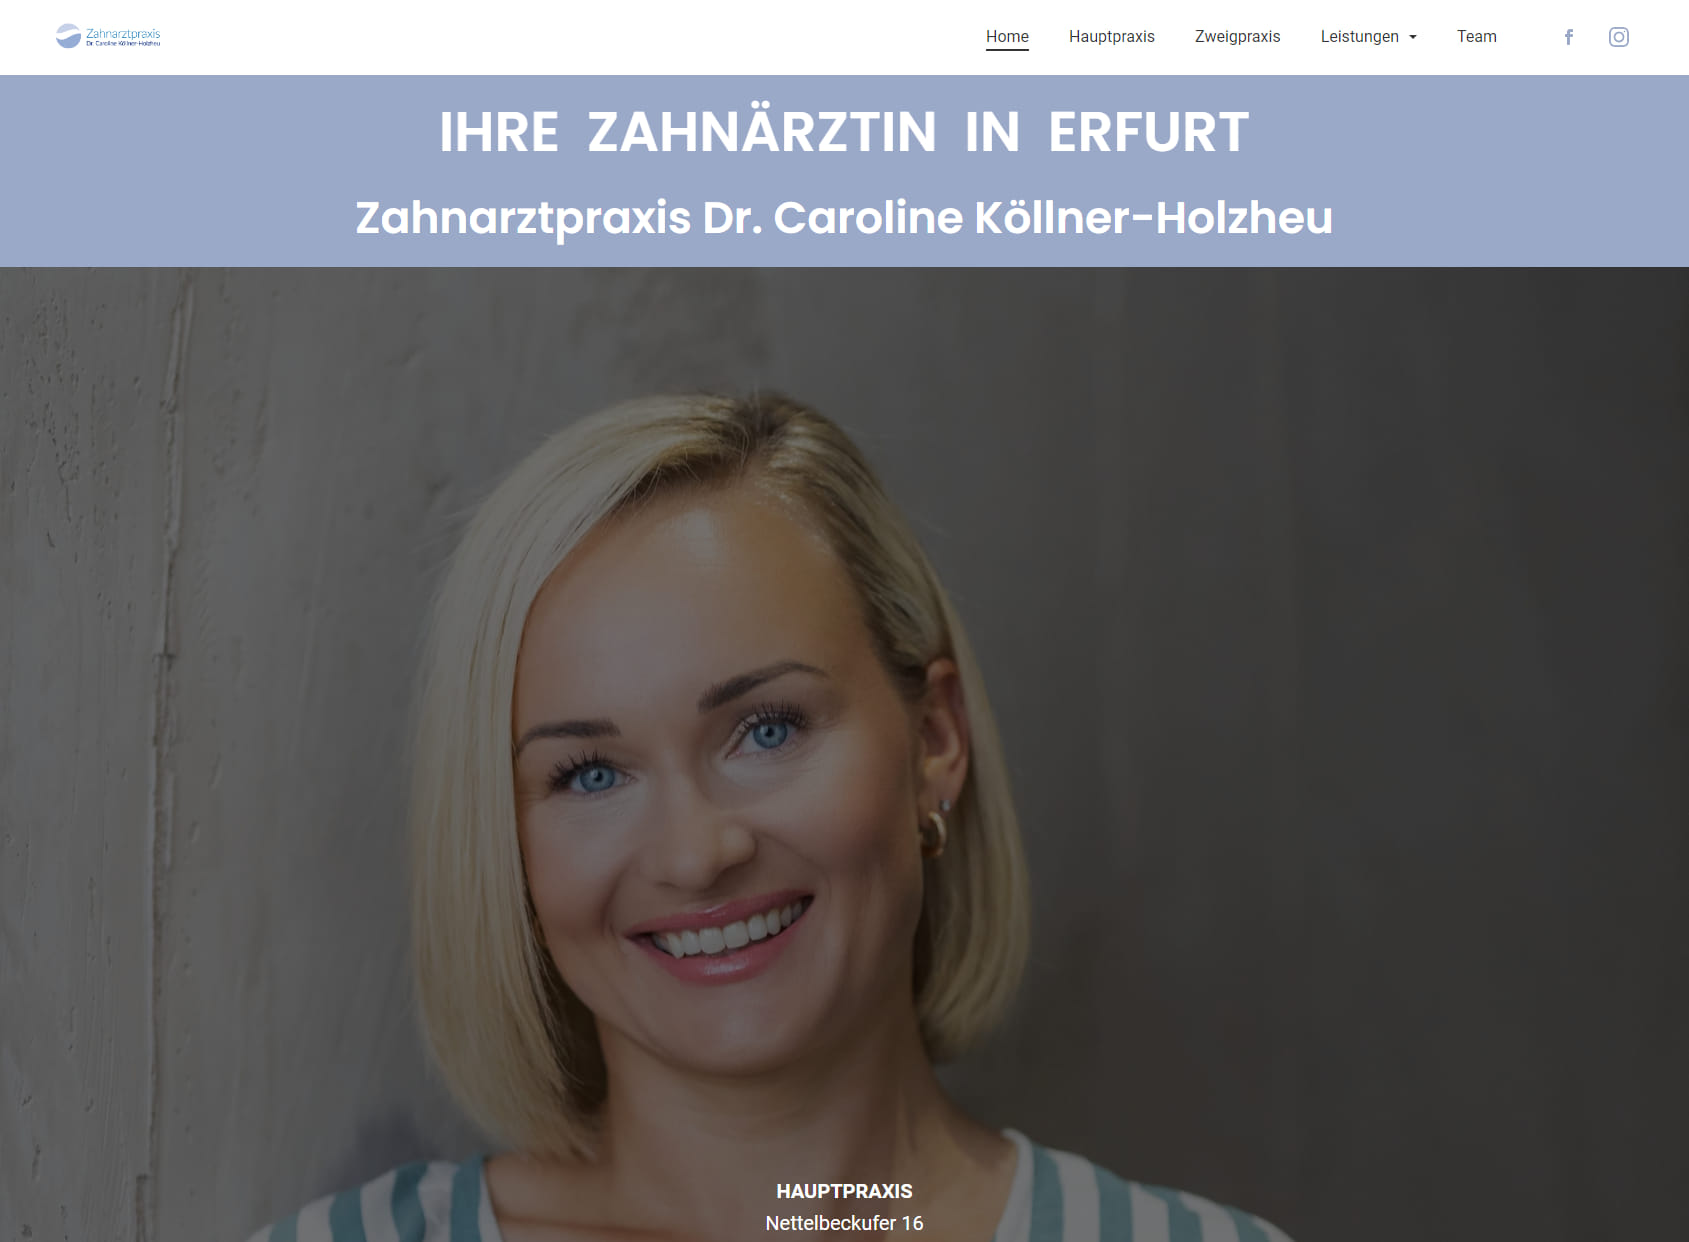 Zahnarzt Erfurt / Zahnarztpraxis Dr. Caroline Köllner-Holzheu